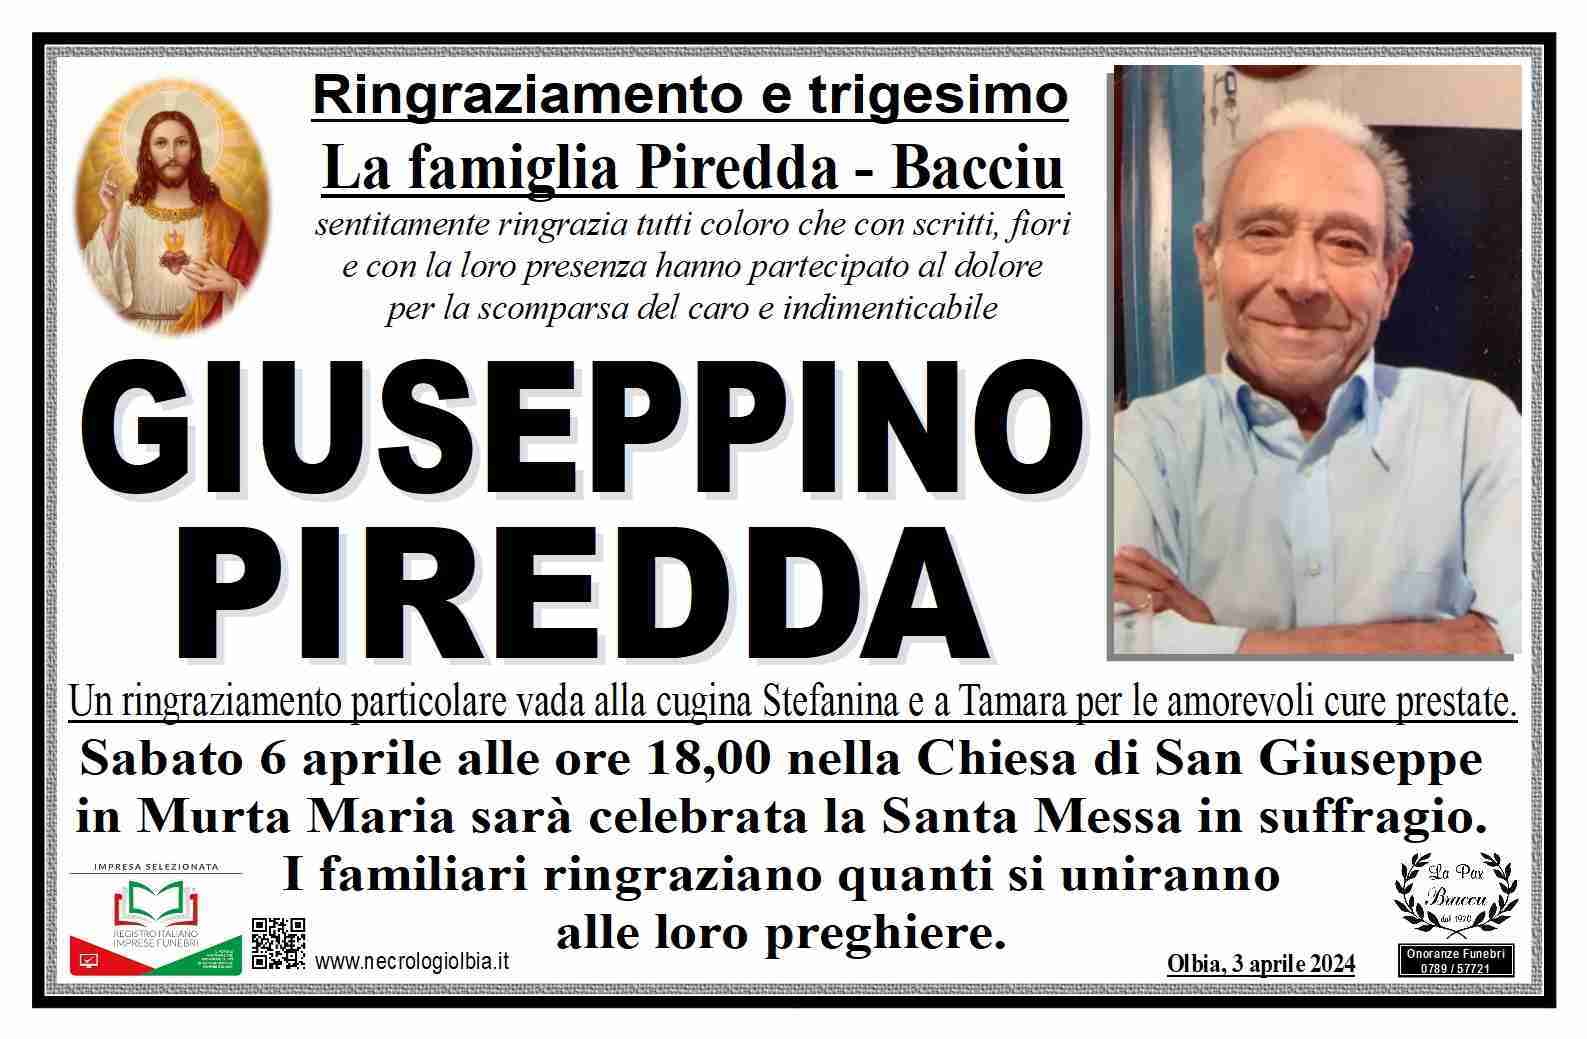 Giuseppino Pireedda